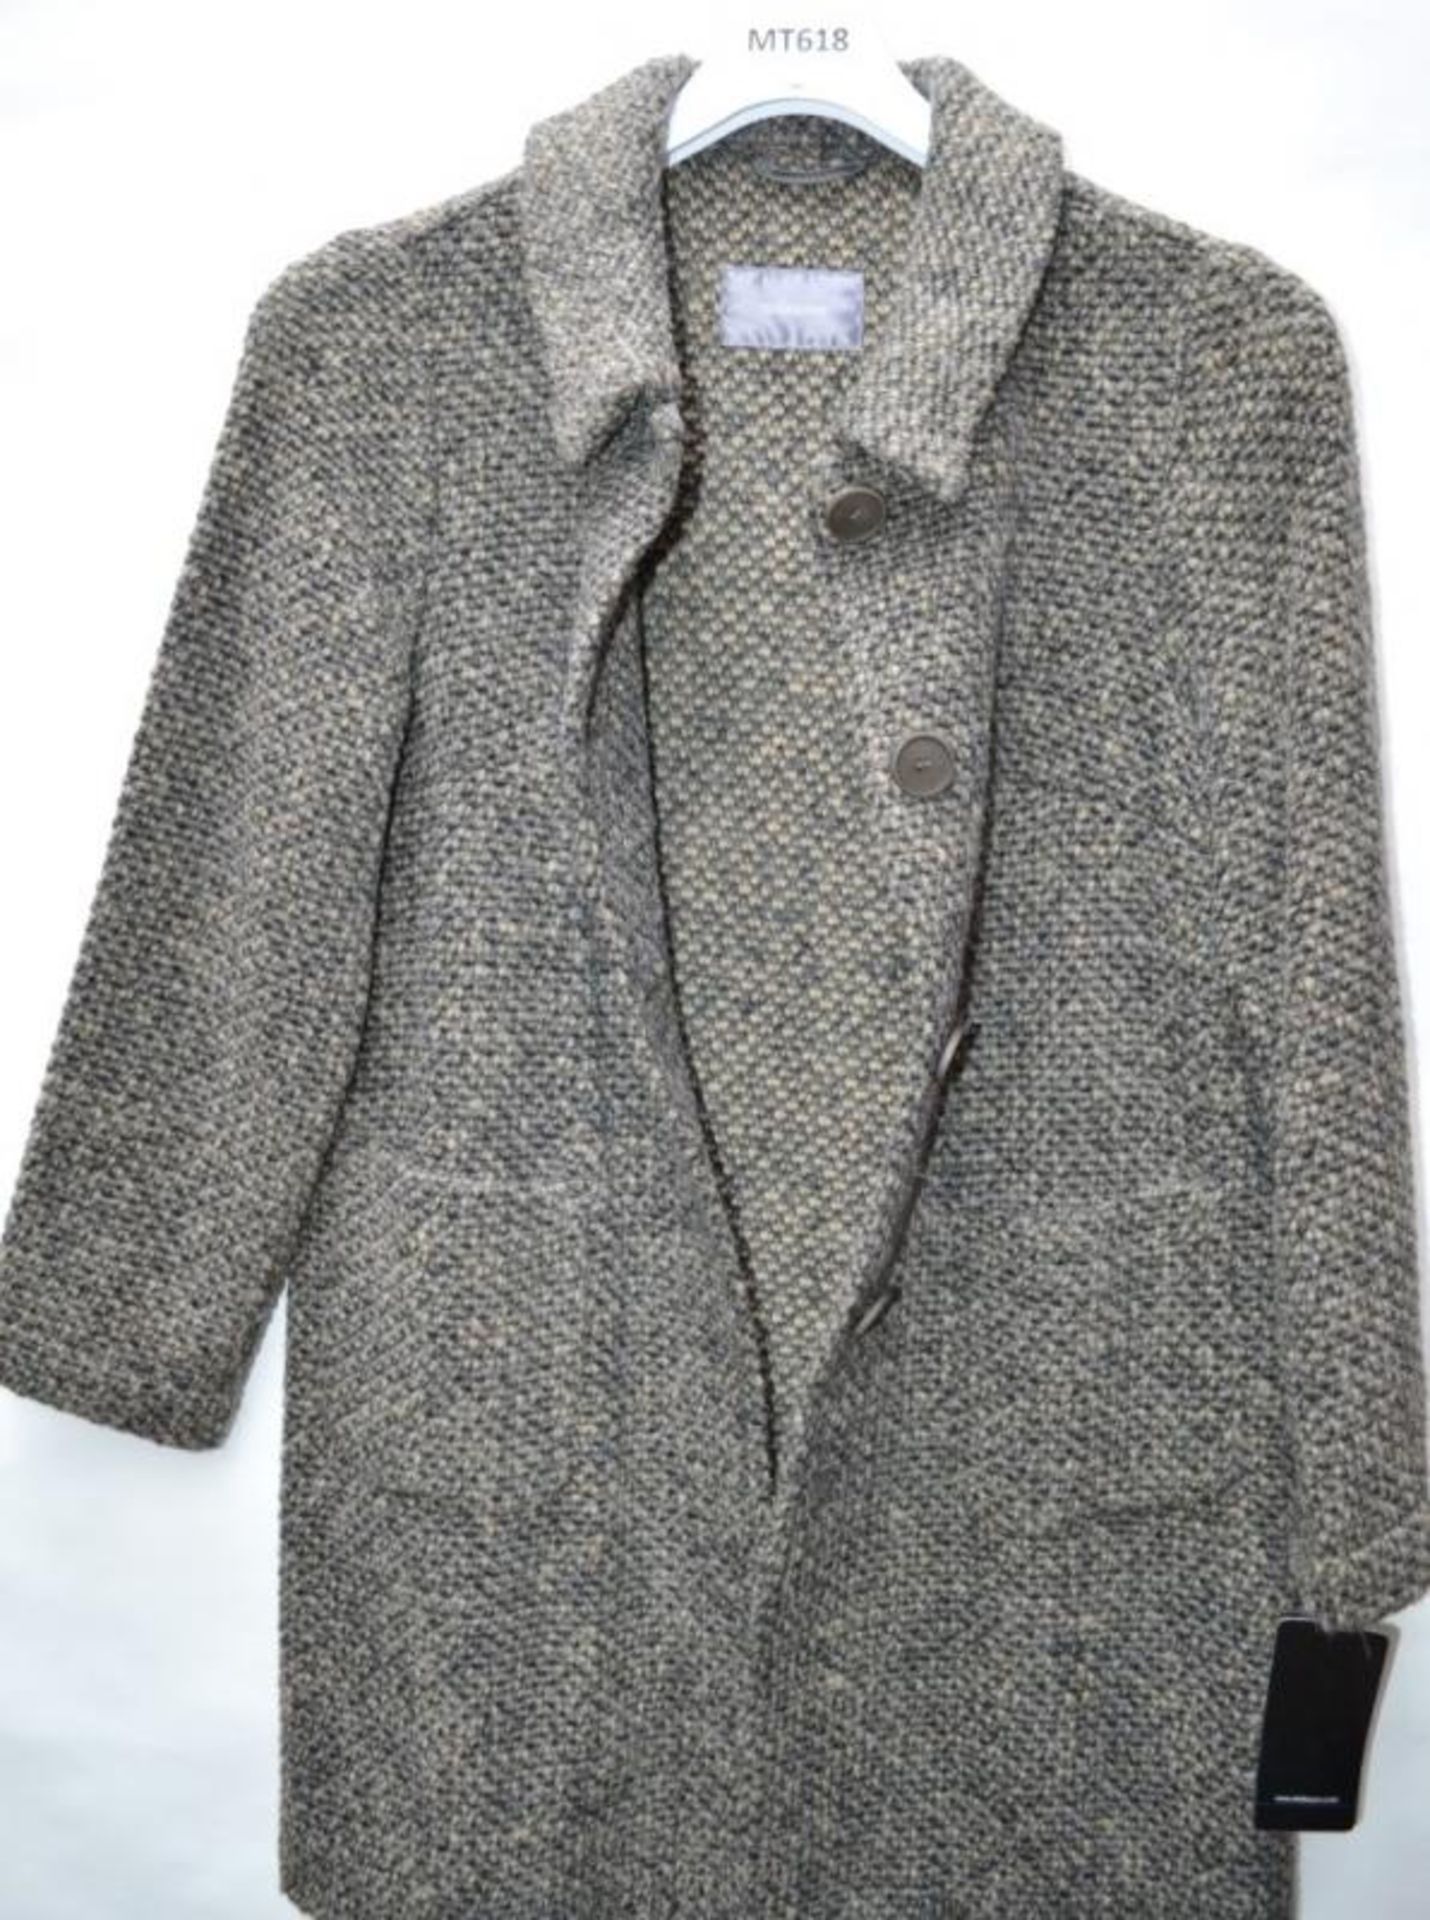 1 x Steilmann Womens Knitted Wool Blend Winter Coat - 87cm Long - Colour: Camel & Metallic Grey - UK - Image 4 of 4